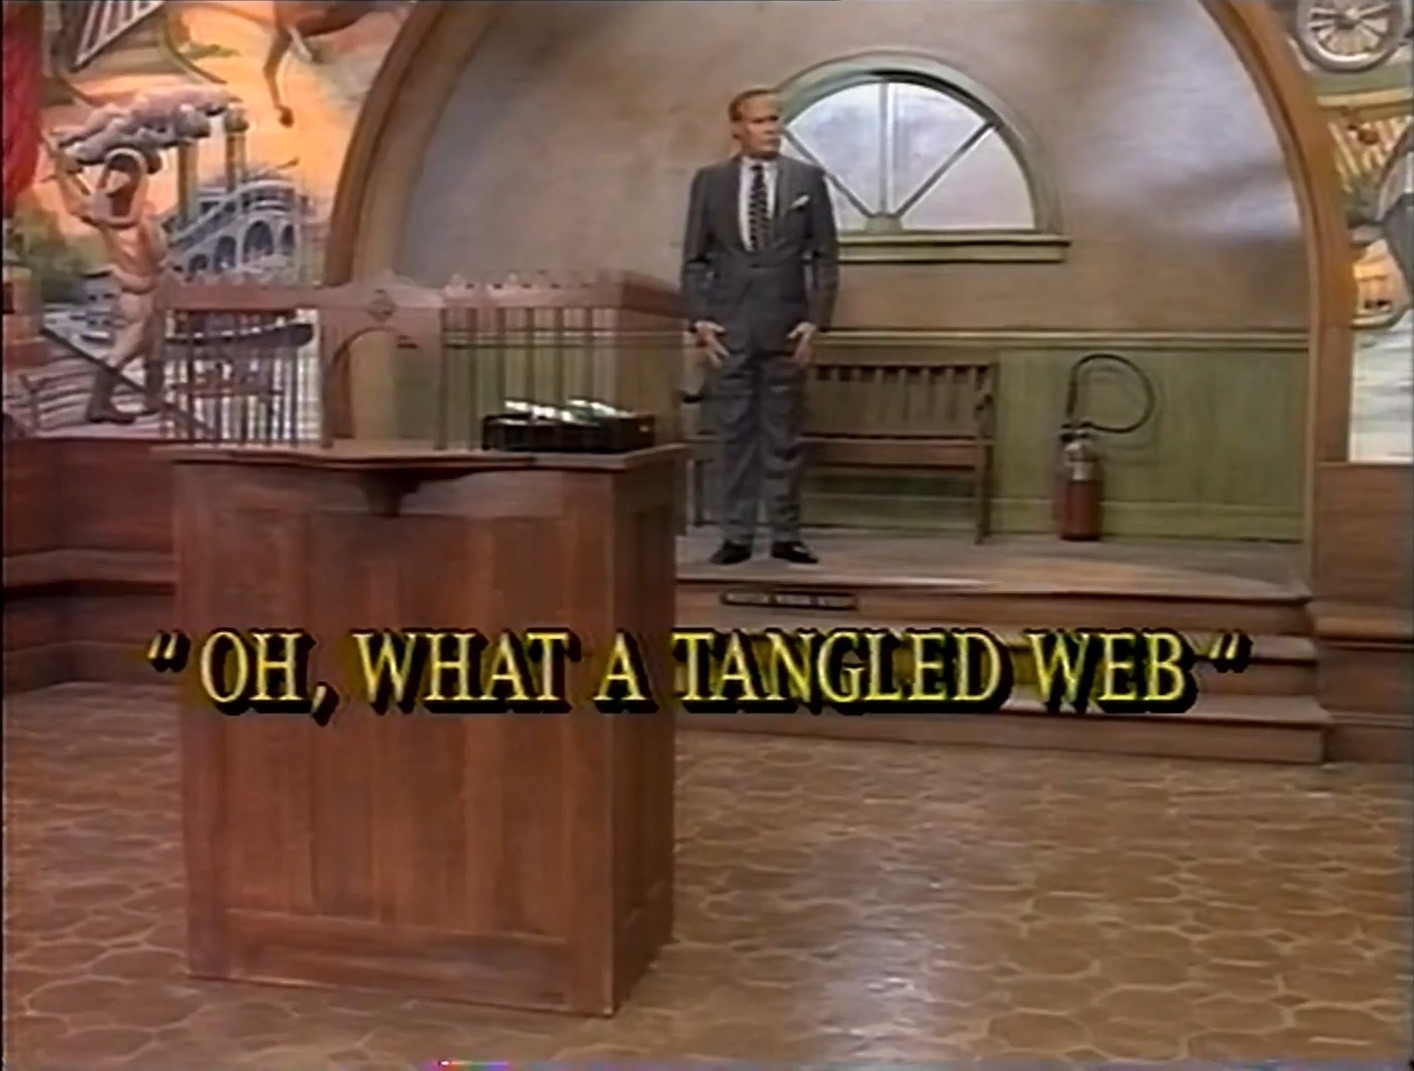 A Tangled Web]